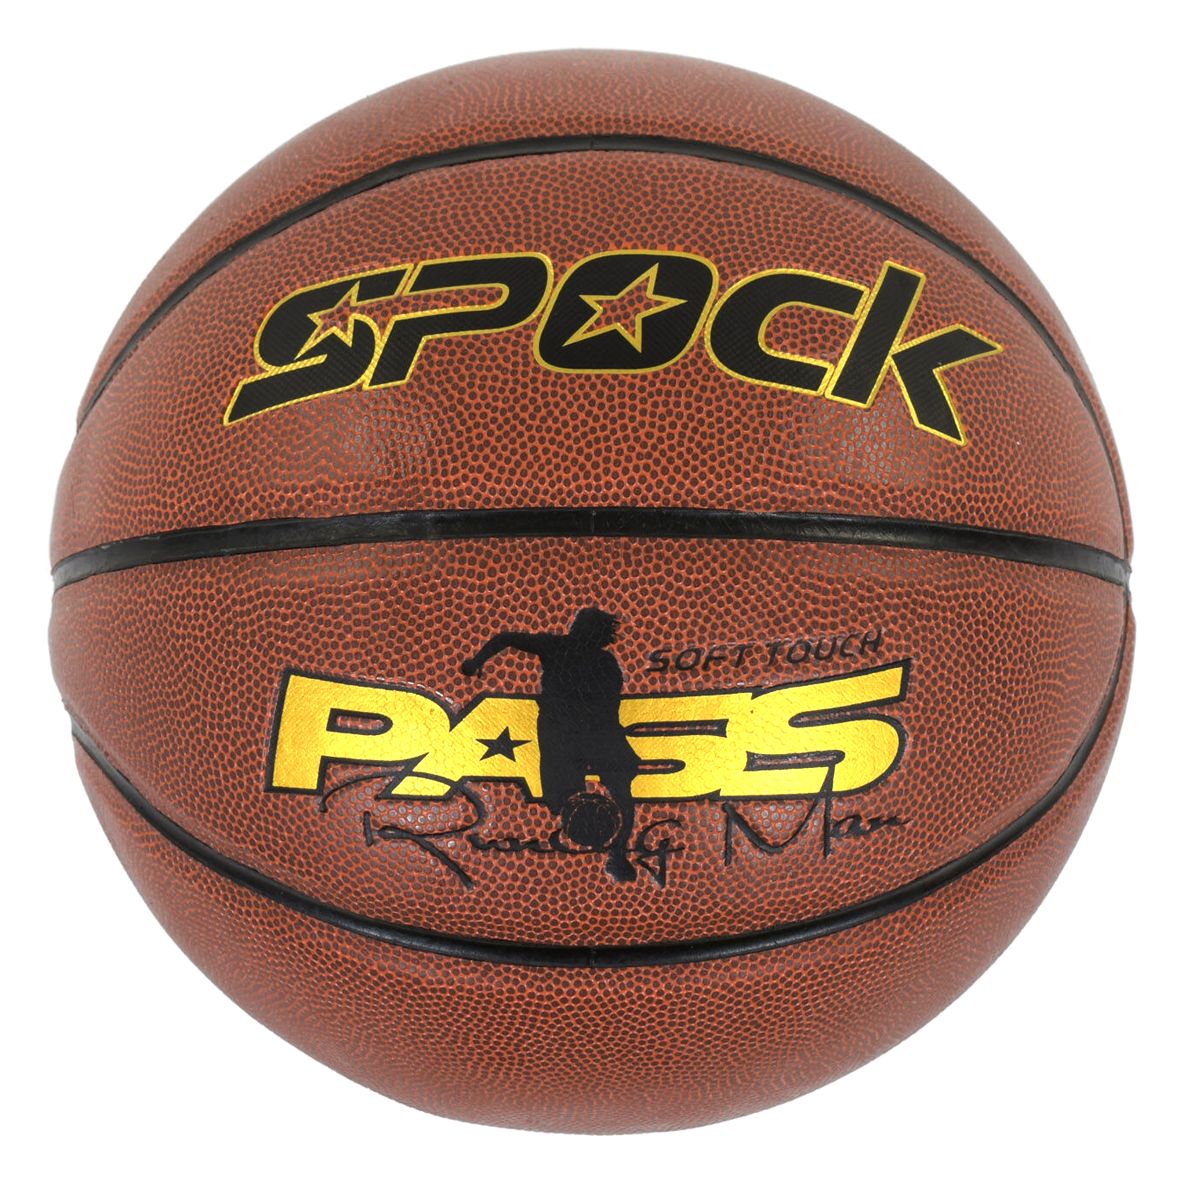 Мяч баскетбольный "Spock"